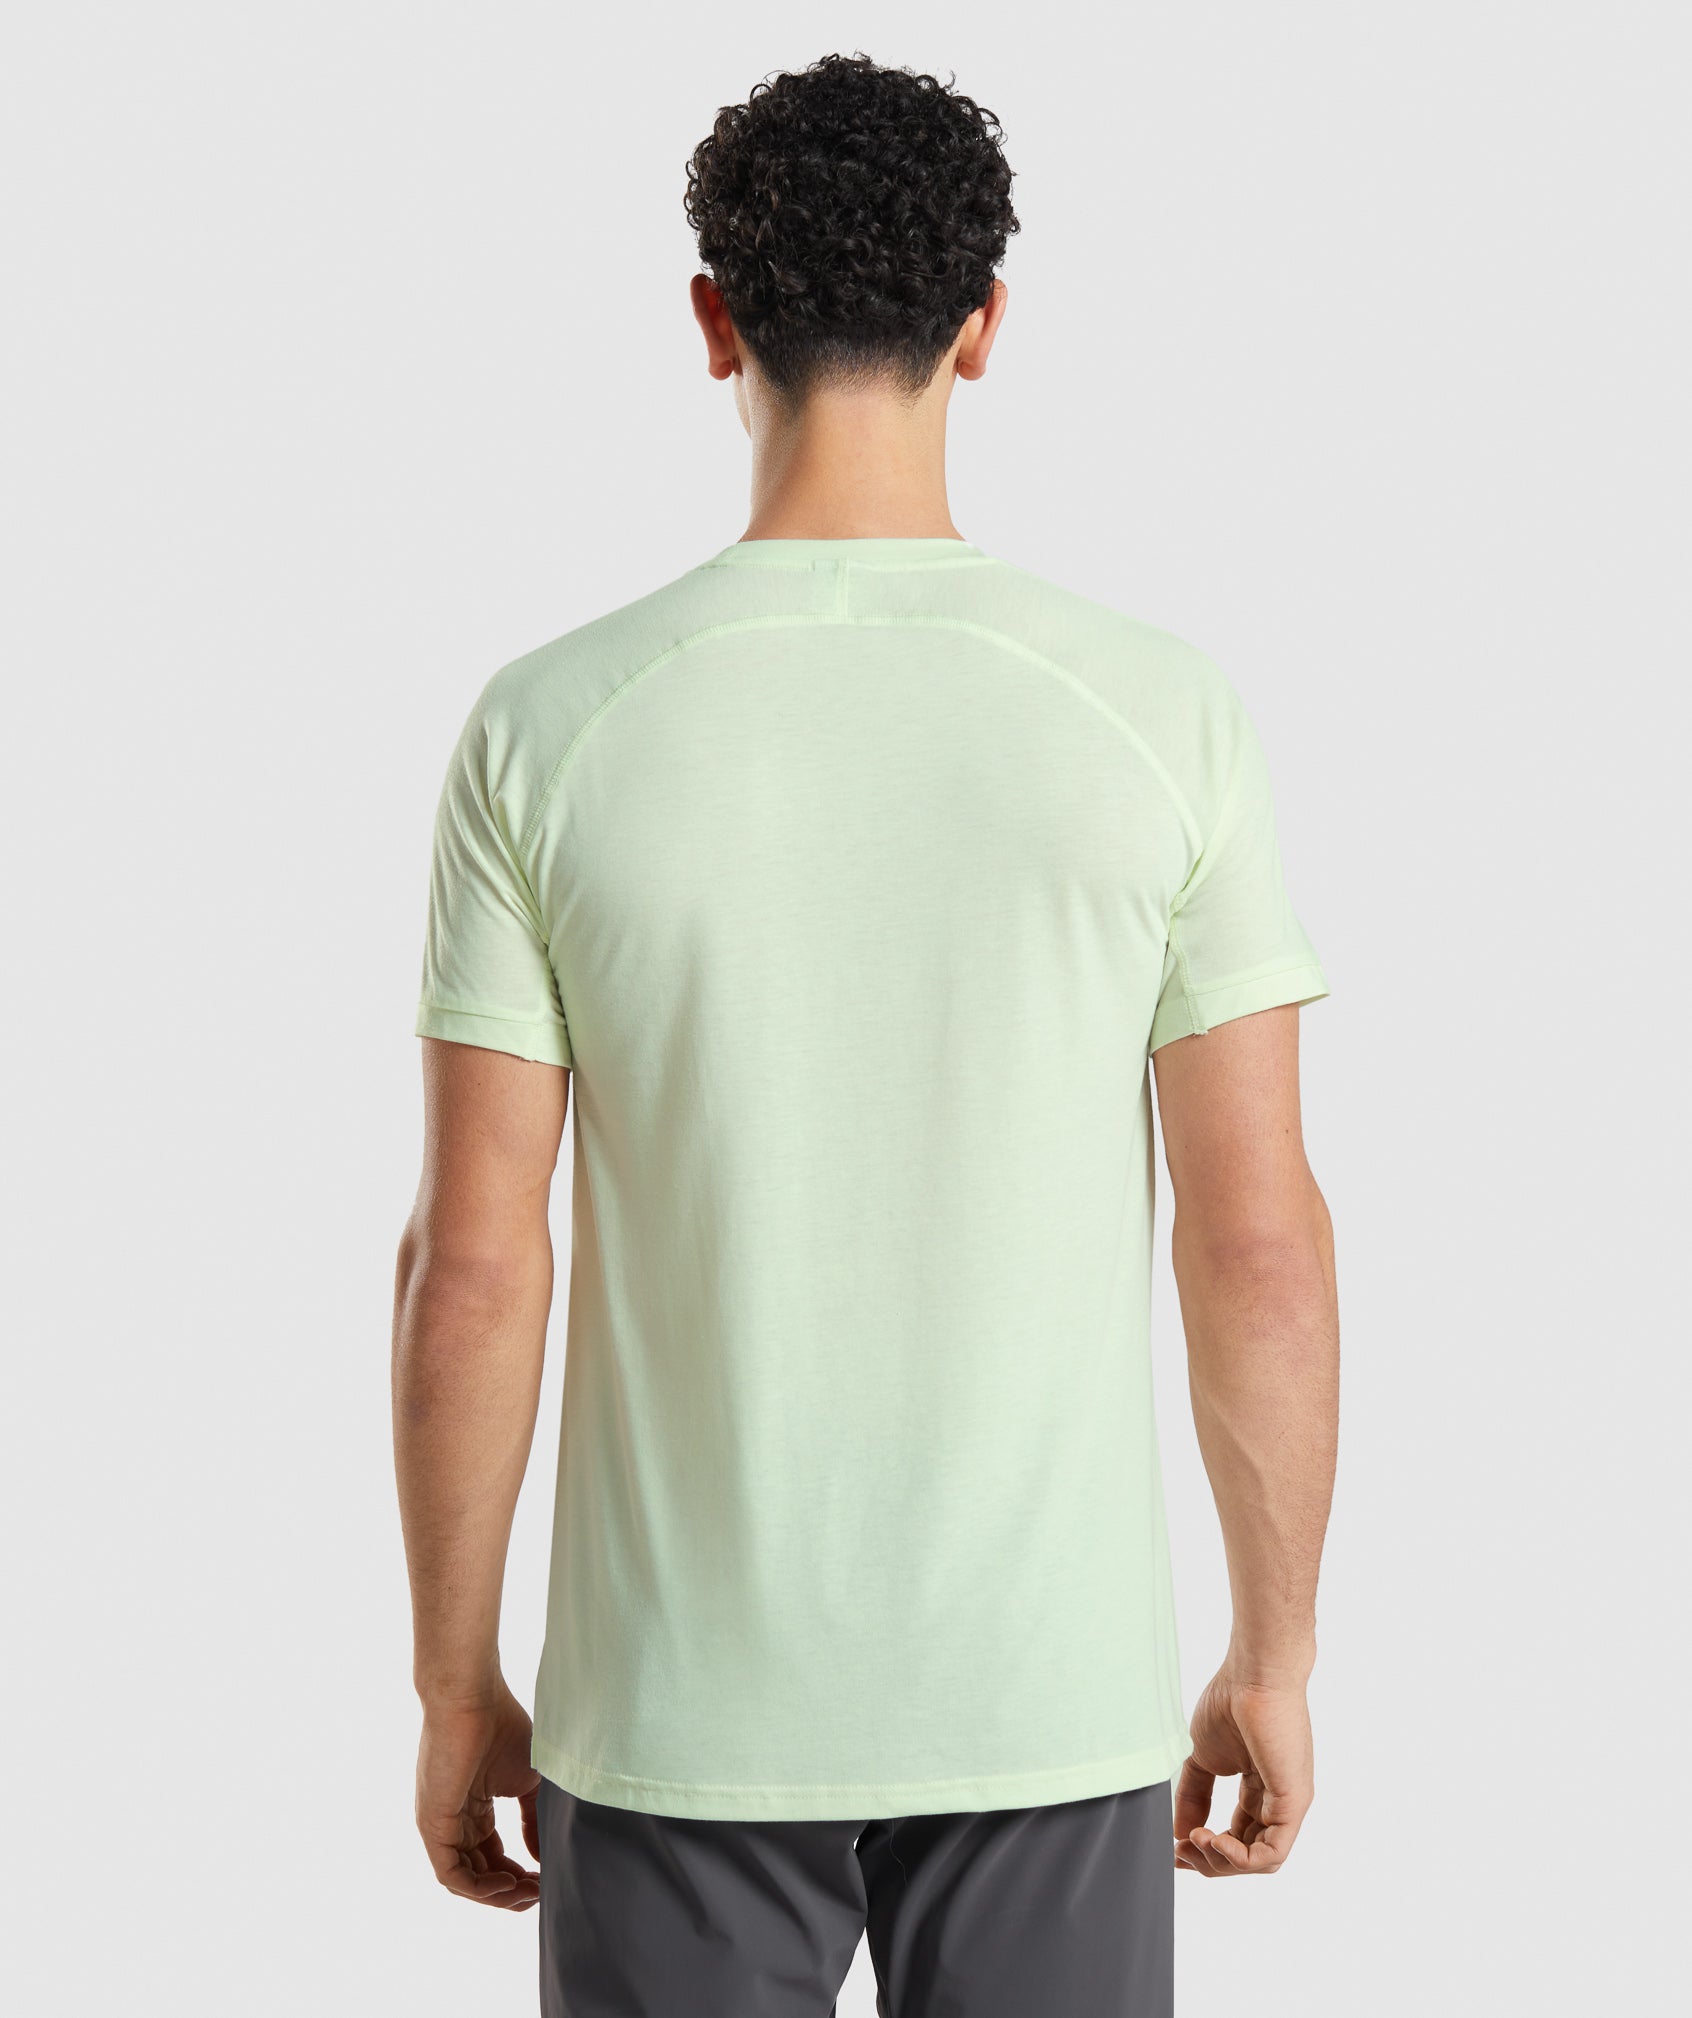 Studio Amplify T-Shirt in Cucumber Green - view 2